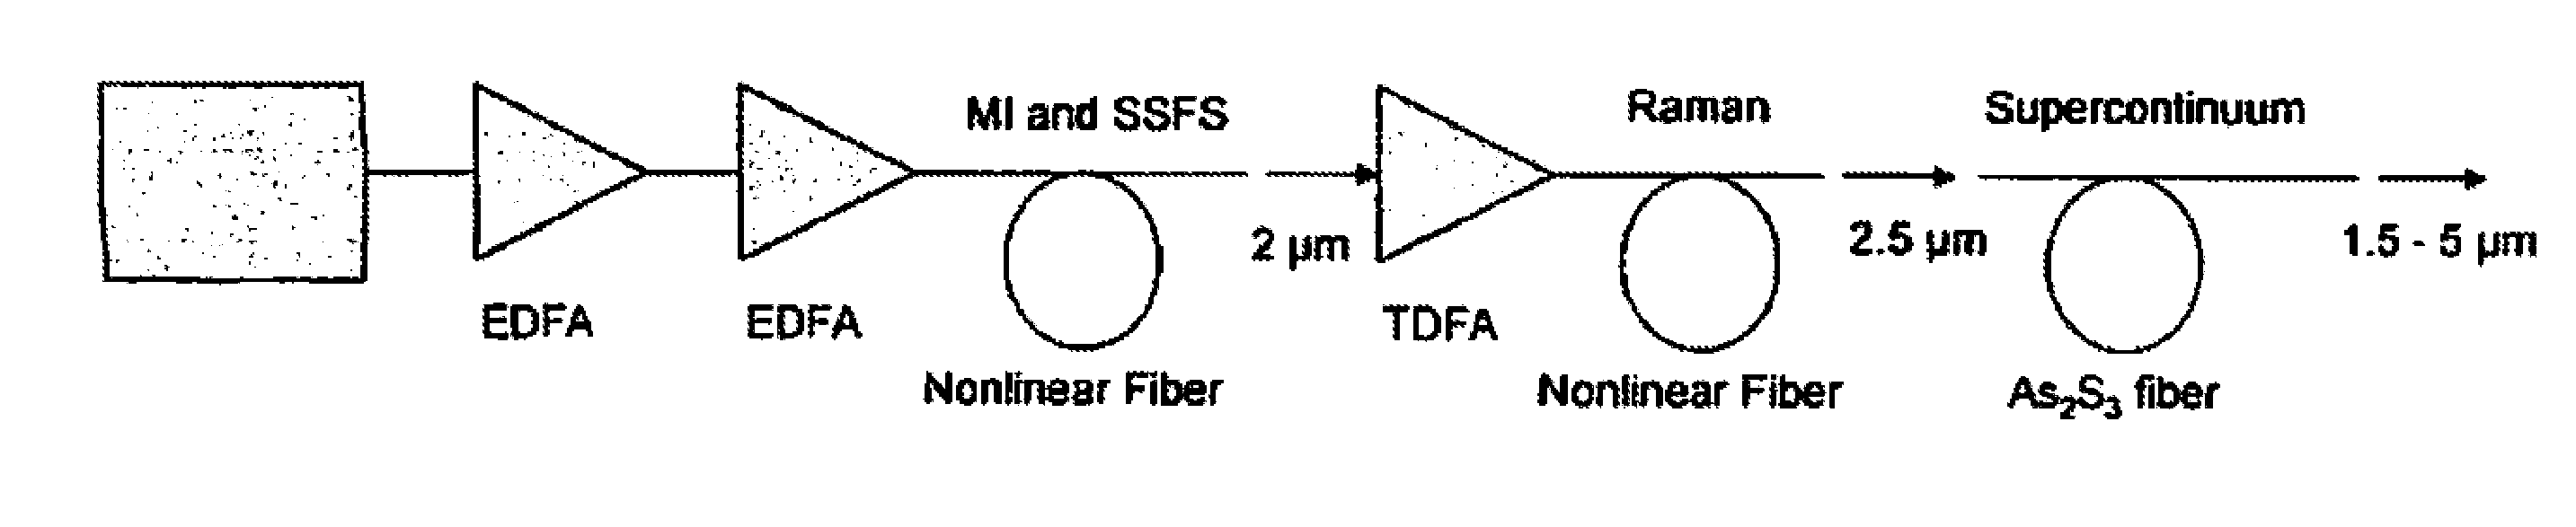 Ir fiber broadband mid-ir light source